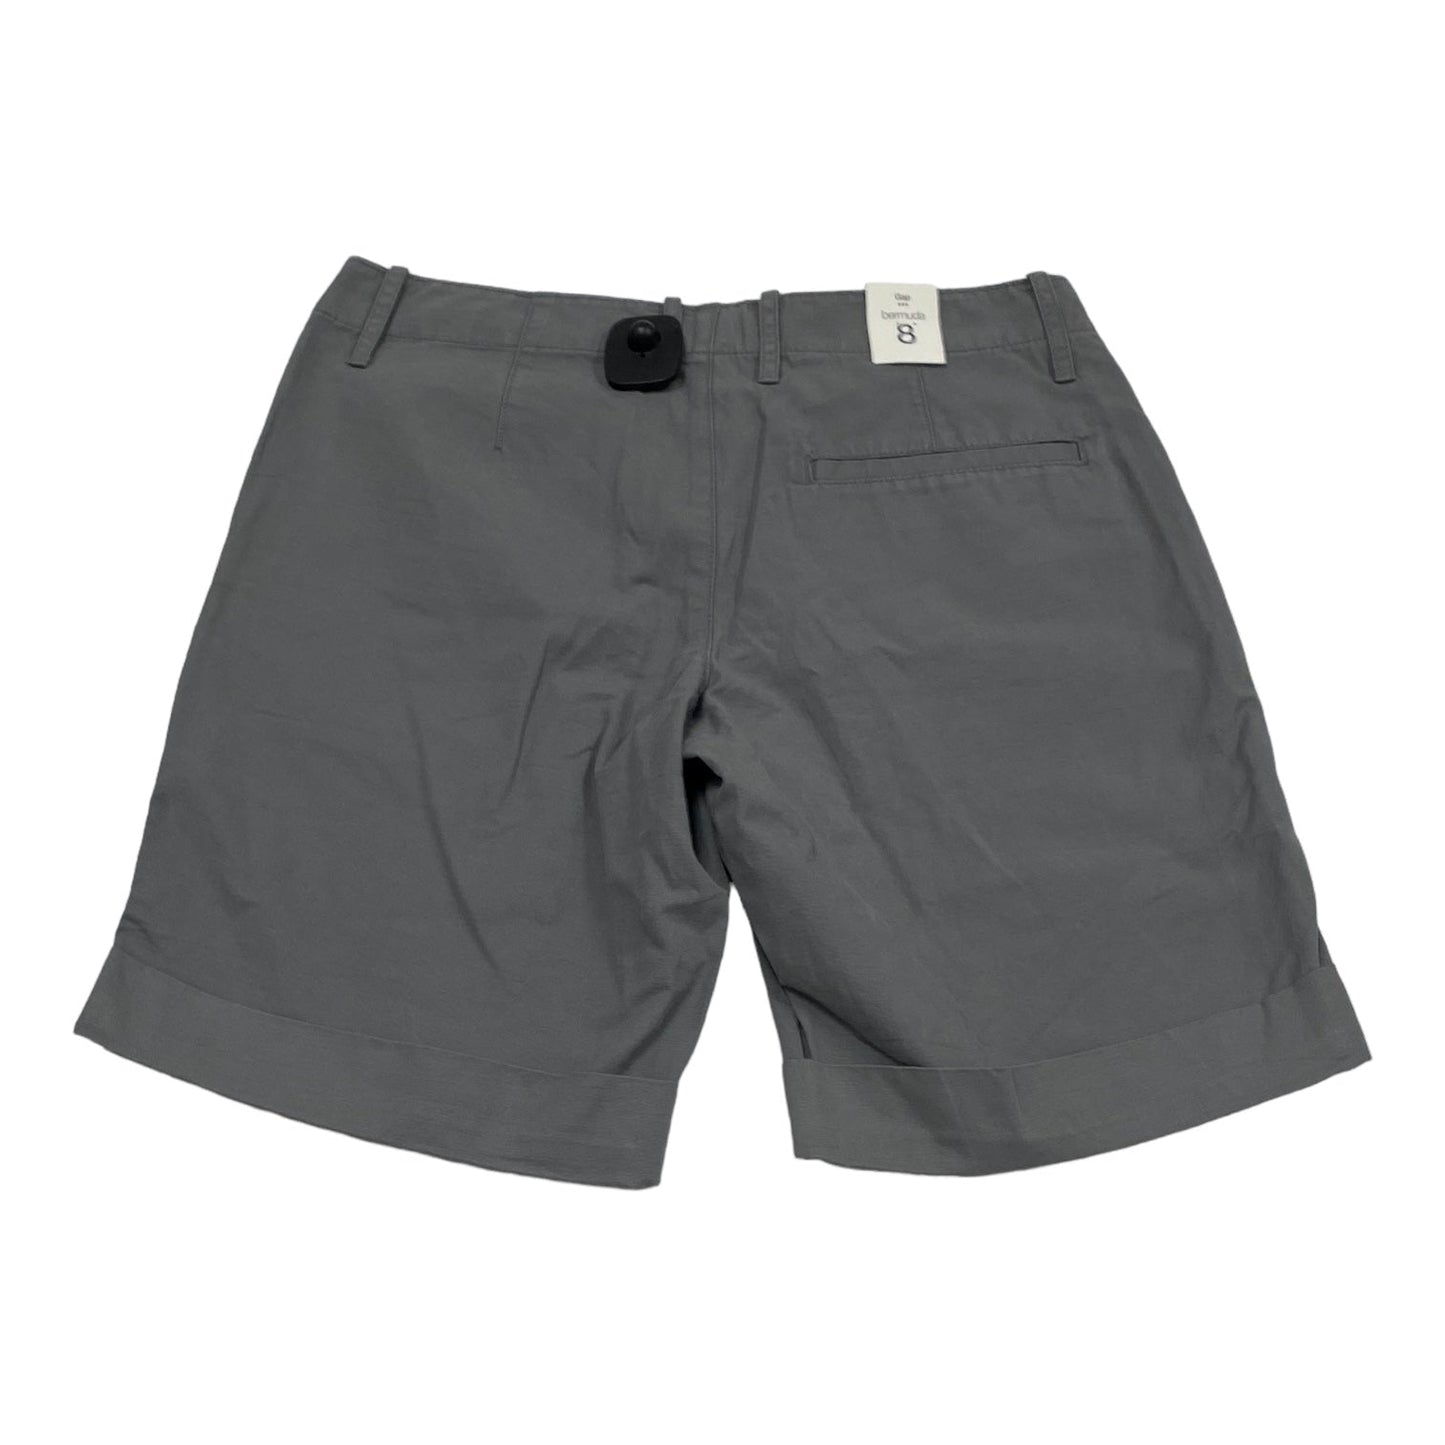 Grey Shorts Gap, Size 8